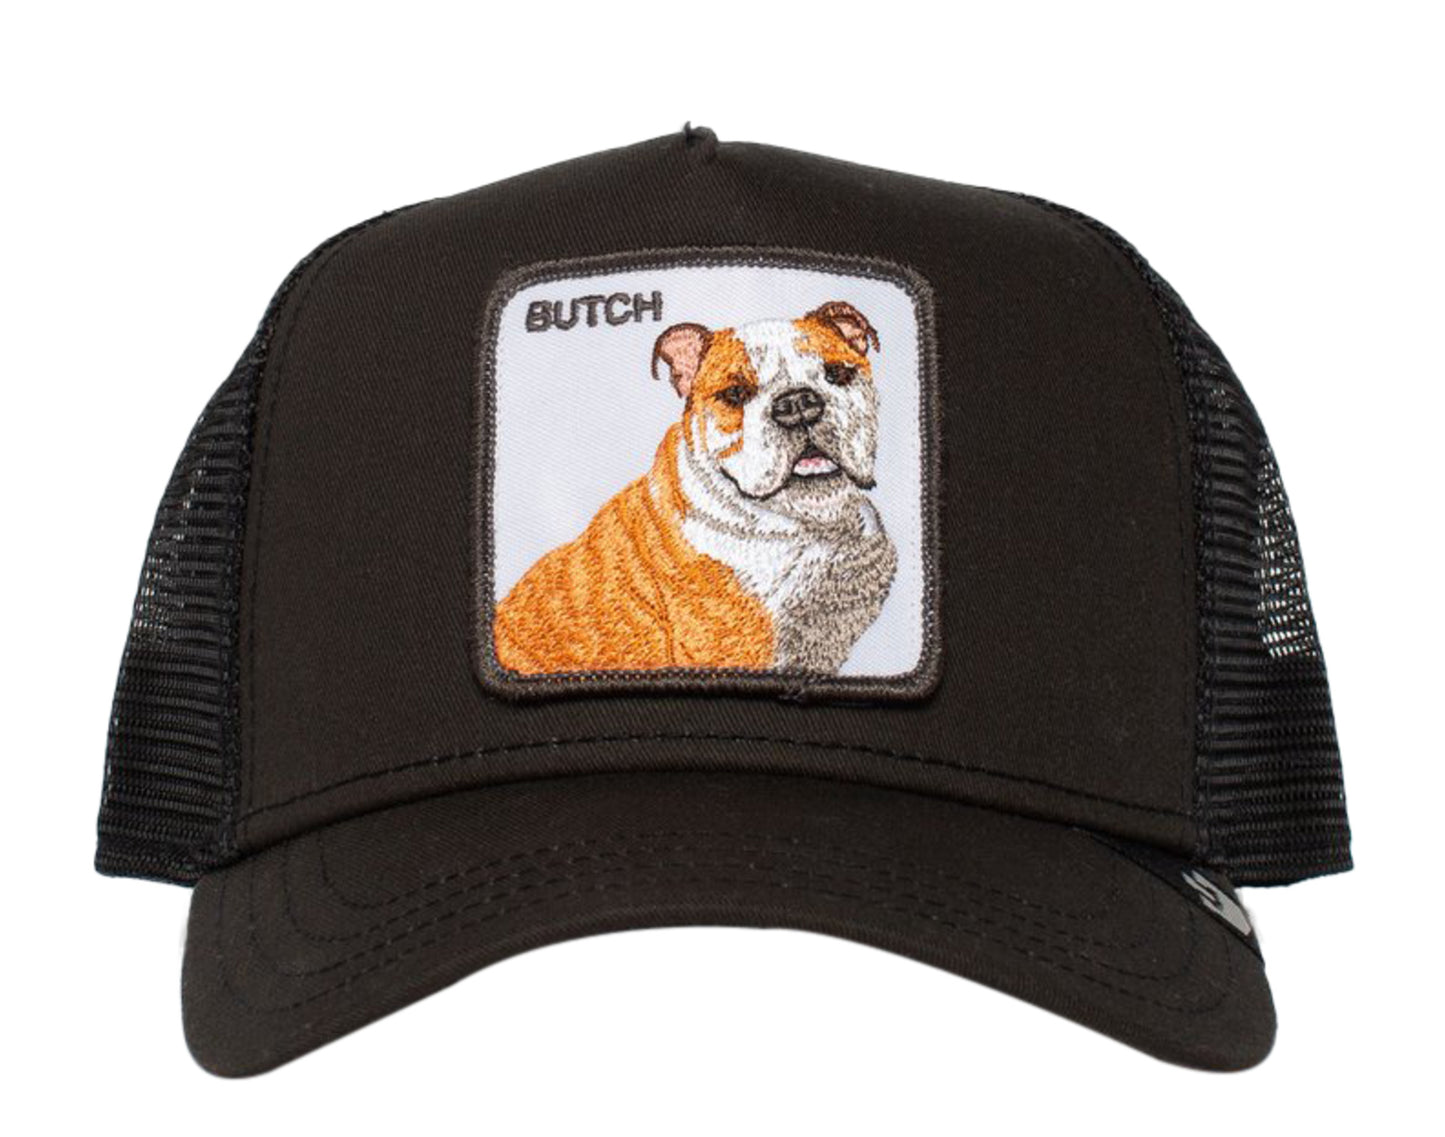 Goorin Bros - The Farm - Butch Bulldog Black Men's Trucker Hat 101-0250-BLK